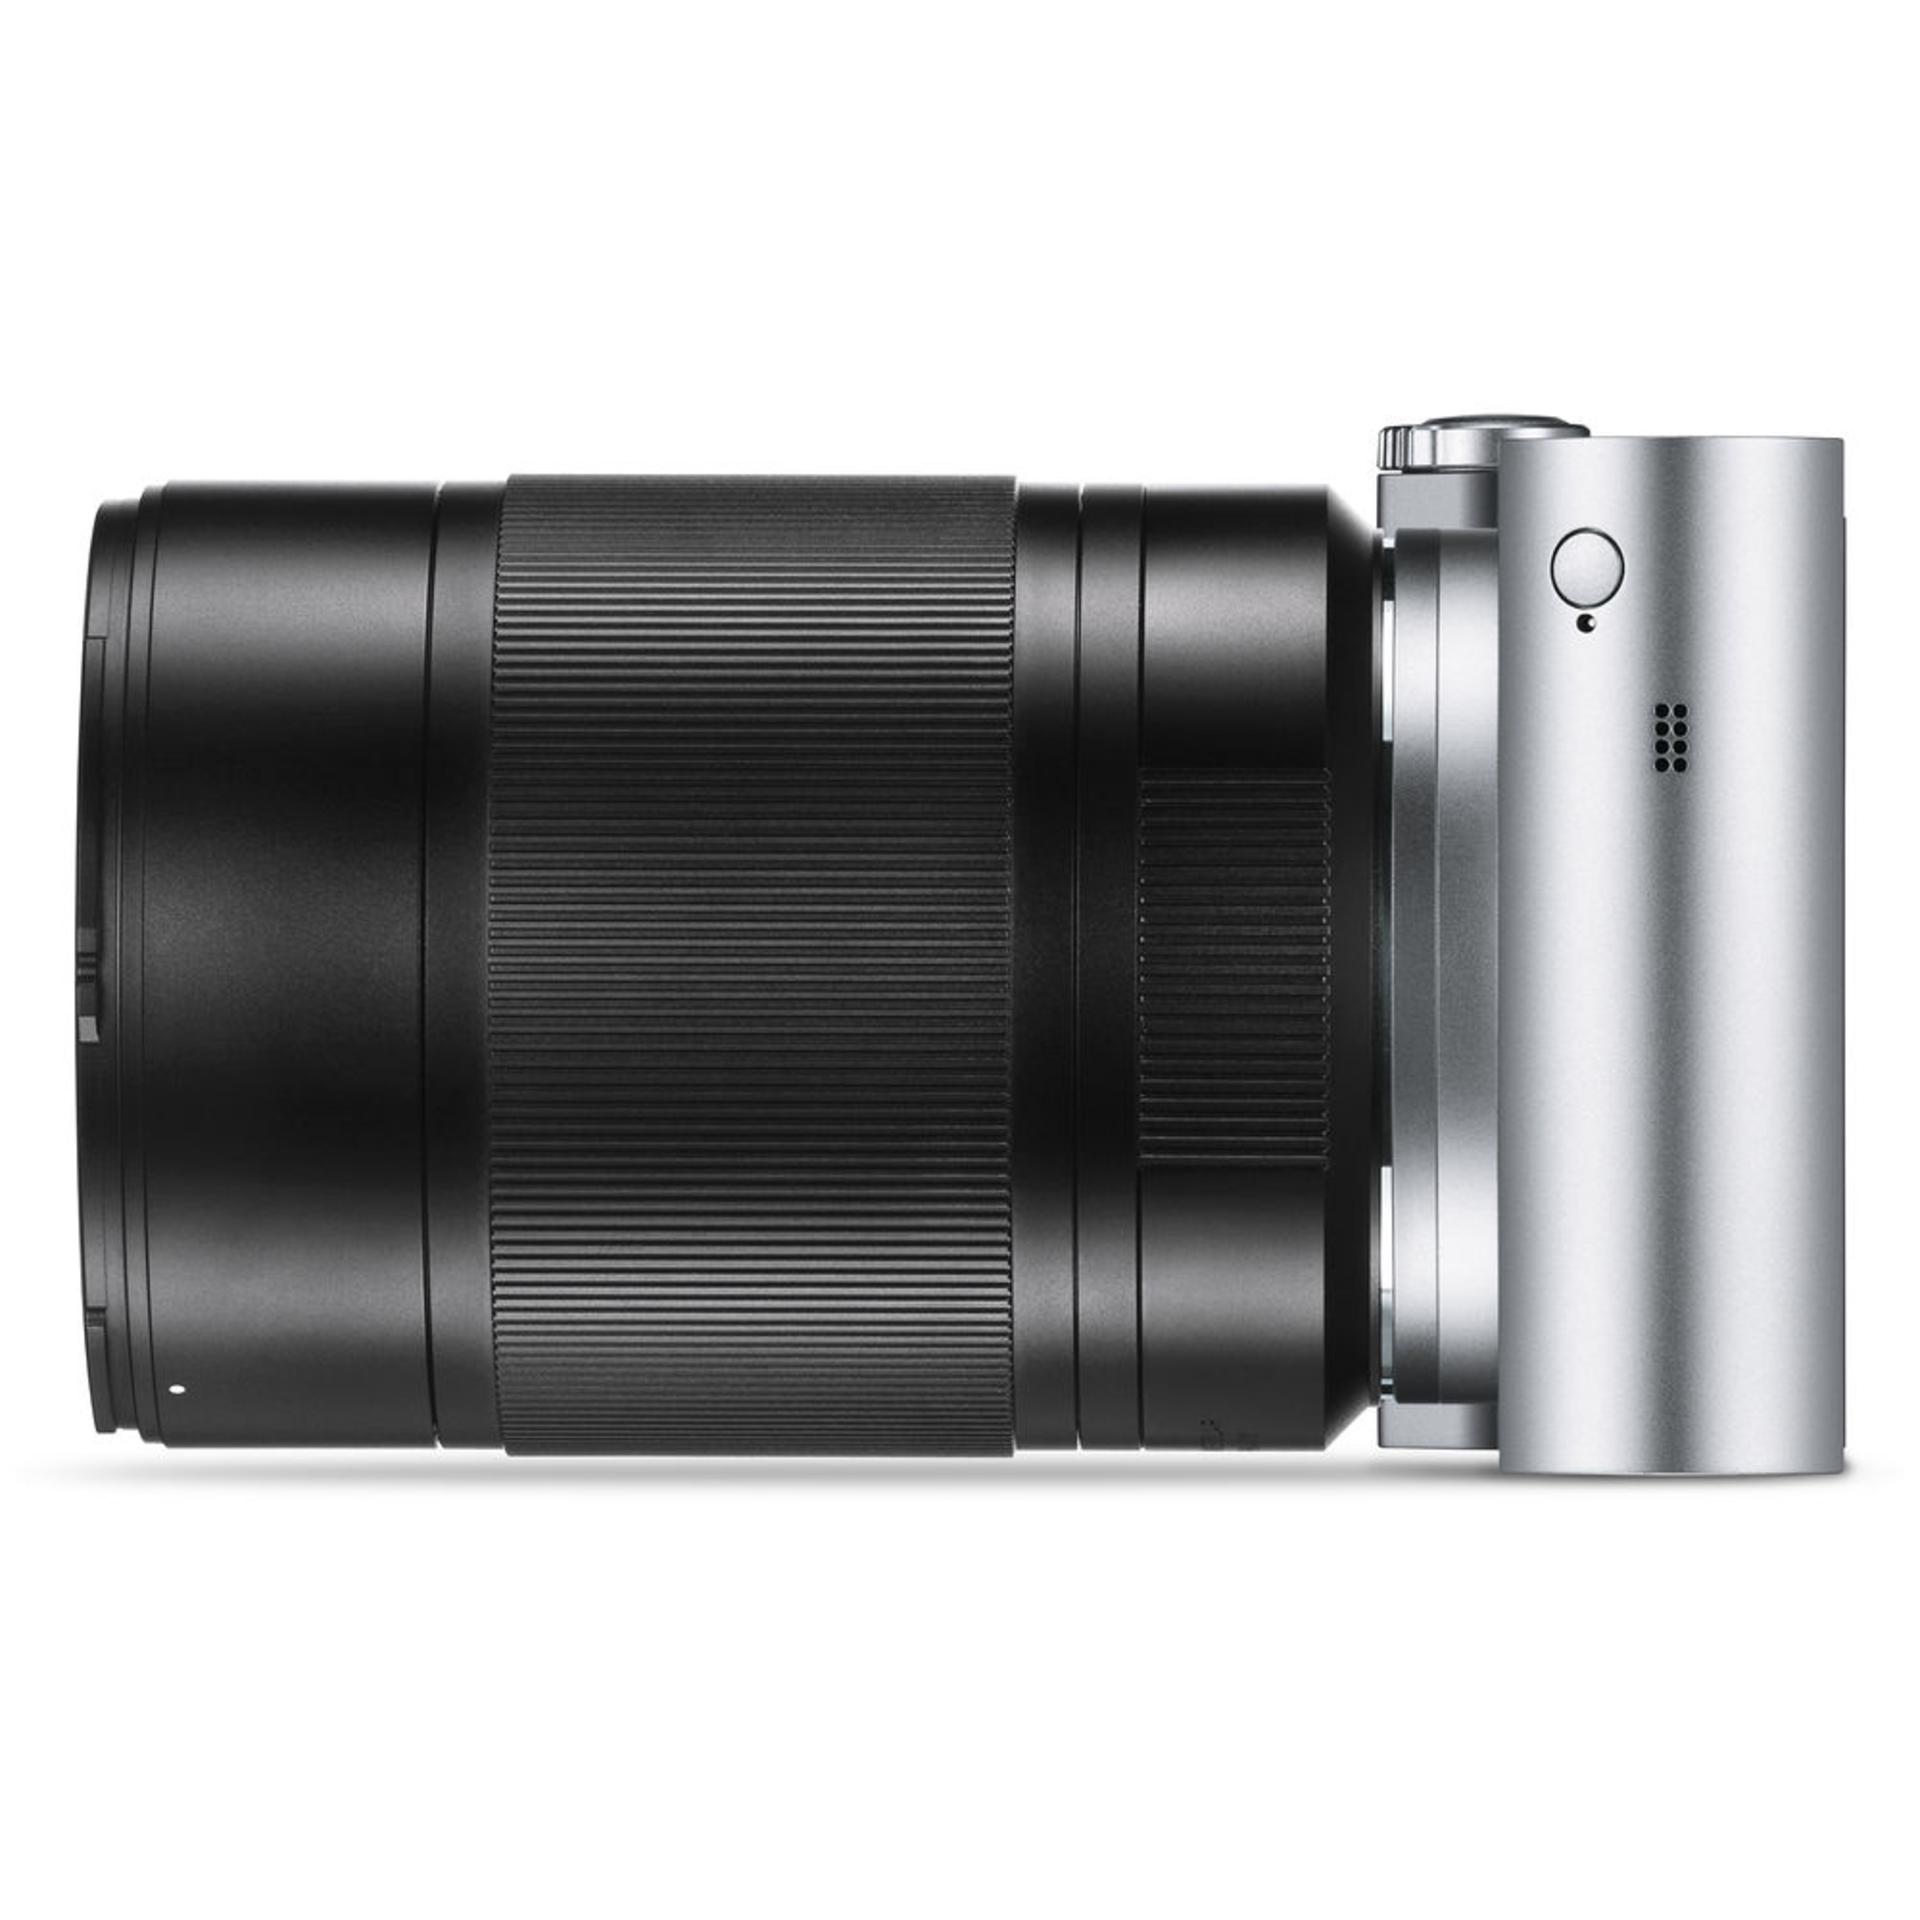 Leica APO-Macro-Elmarit-TL 60mm f2.8 ASPH	